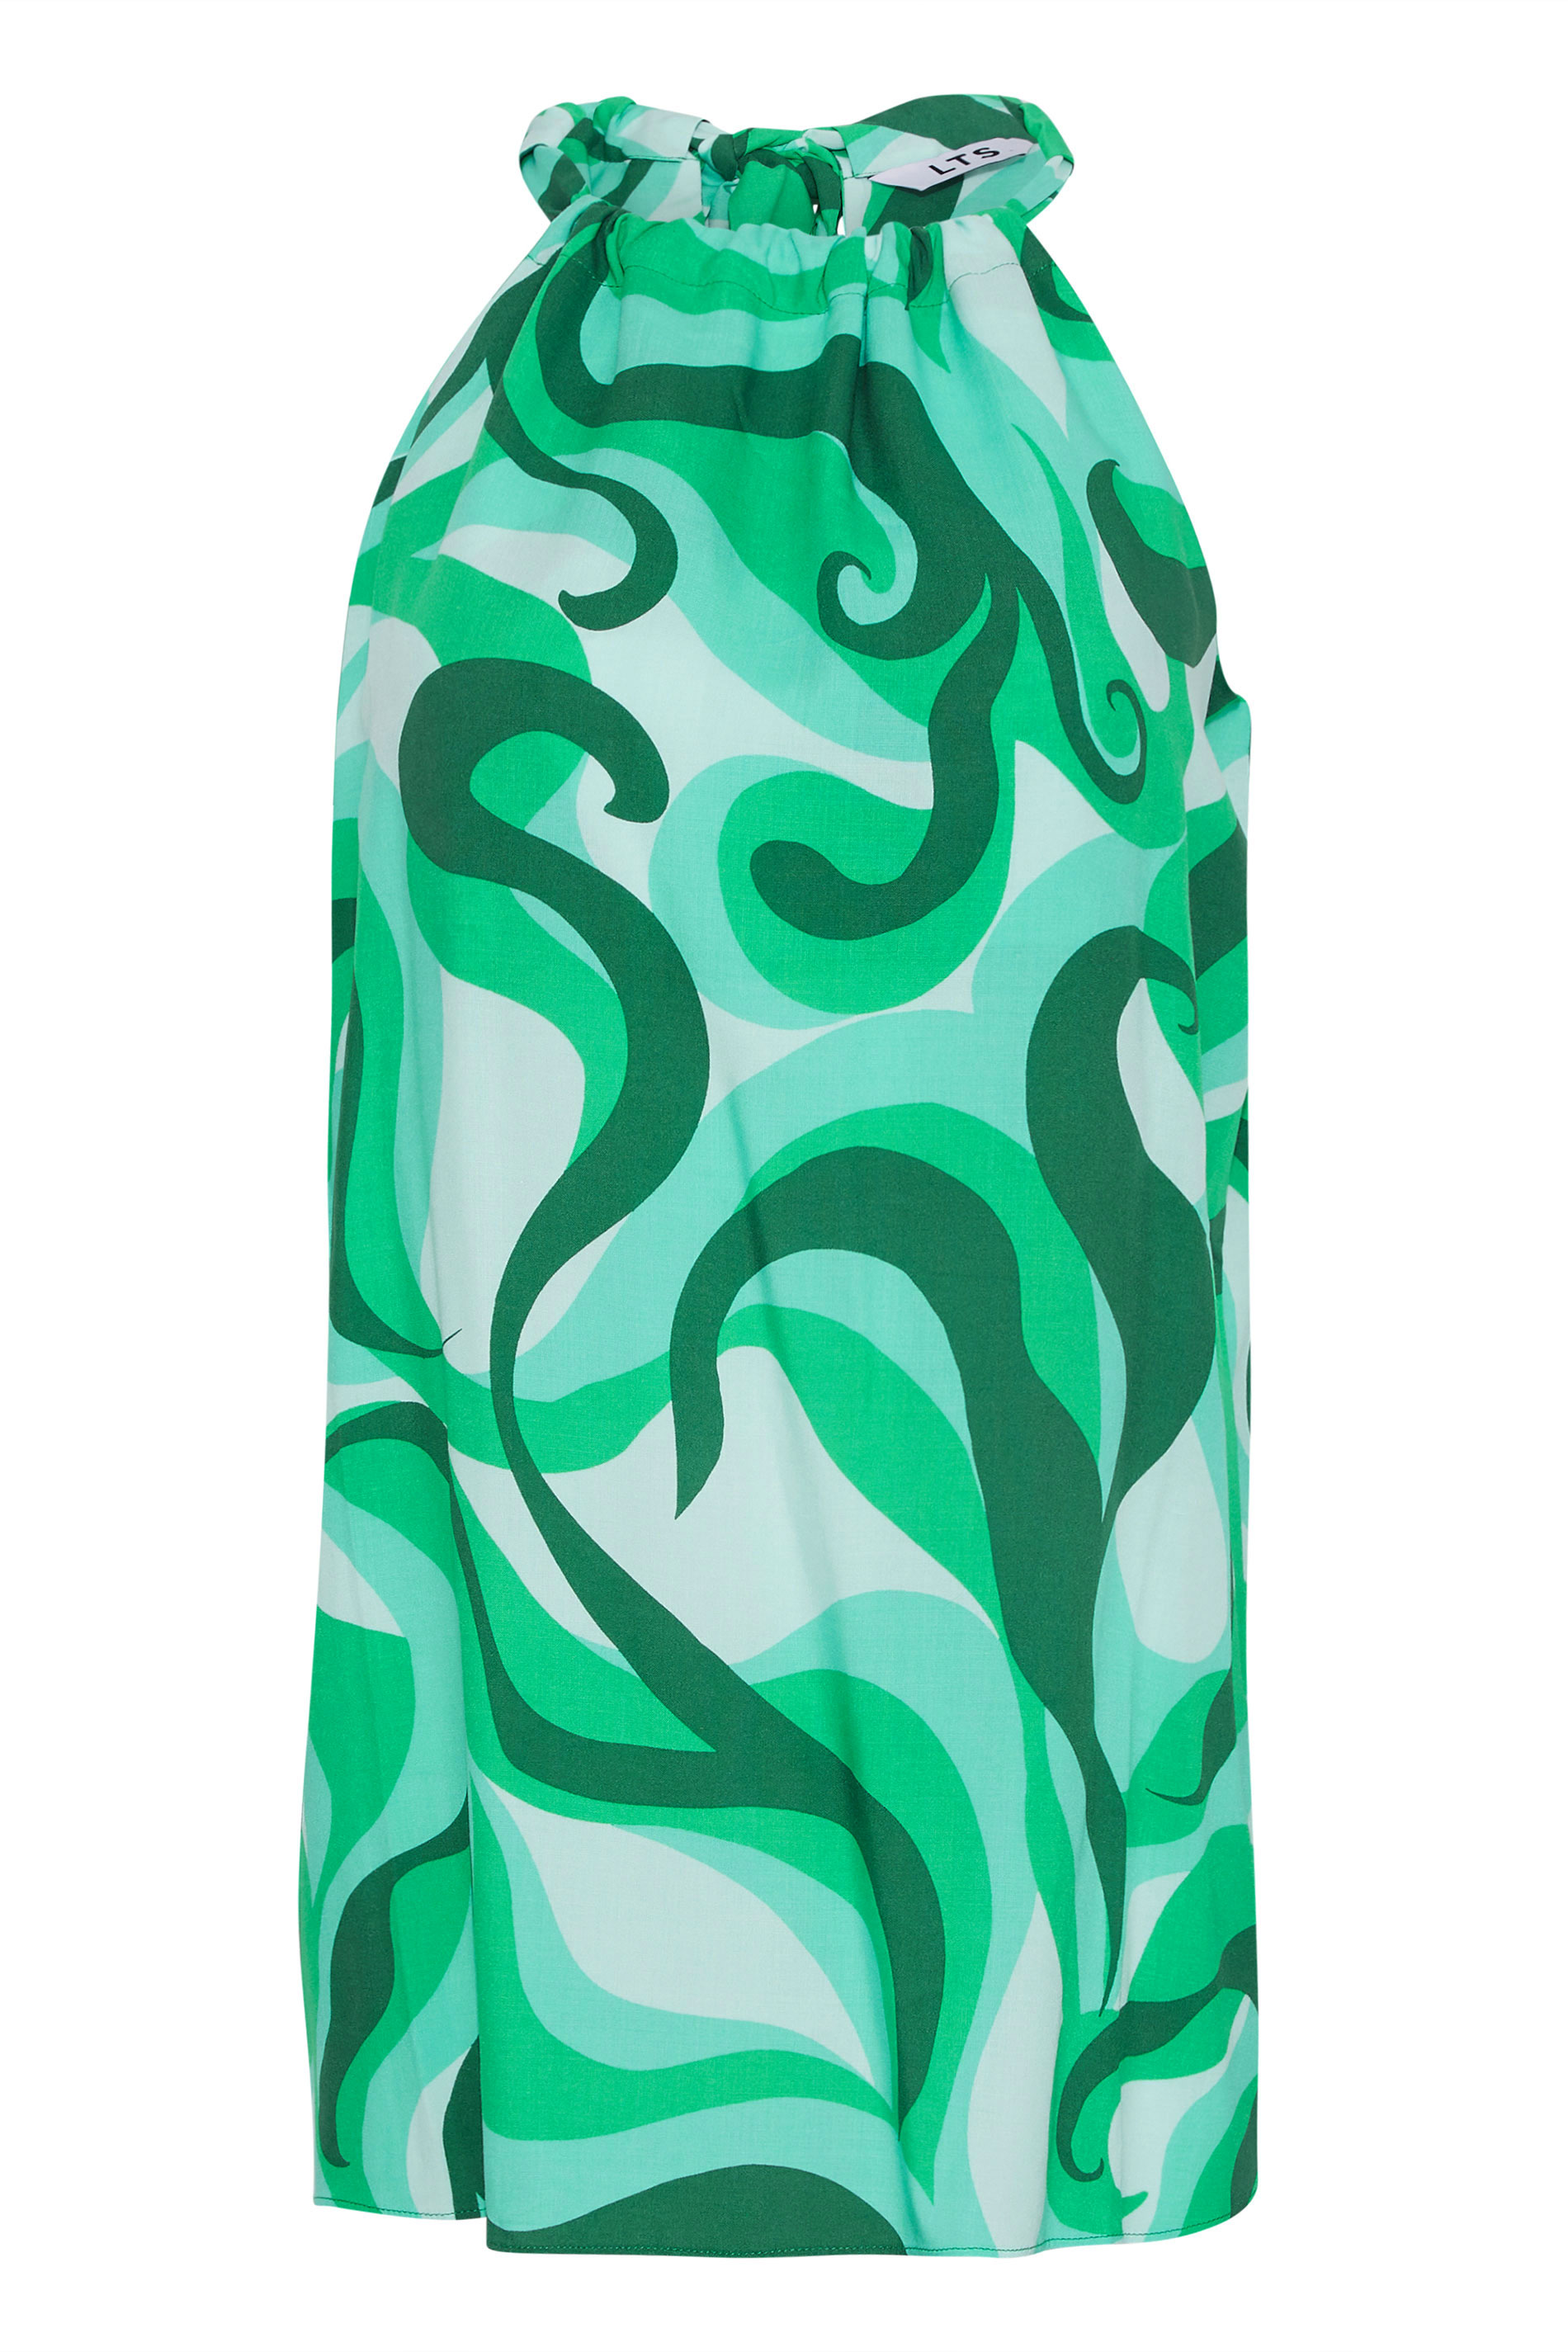 LTS Tall Women's Bright Green Swirl Print Halter Neck Top | Long Tall Sally